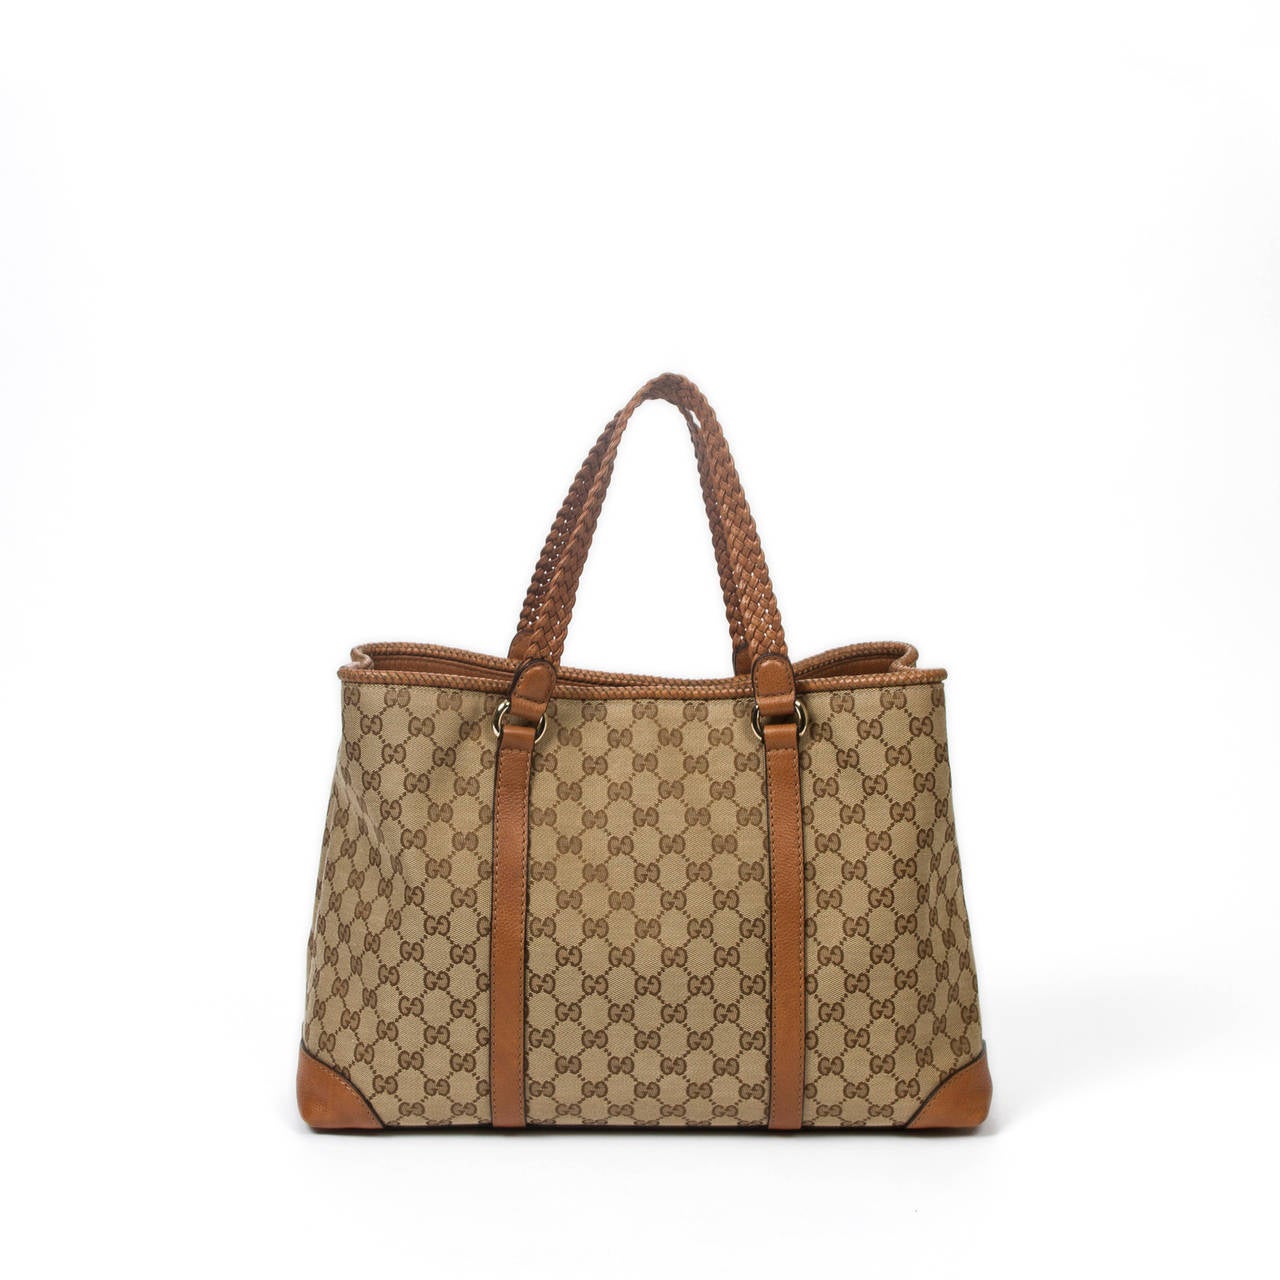 Gucci Tote Bag Beige Monogram For Sale 1